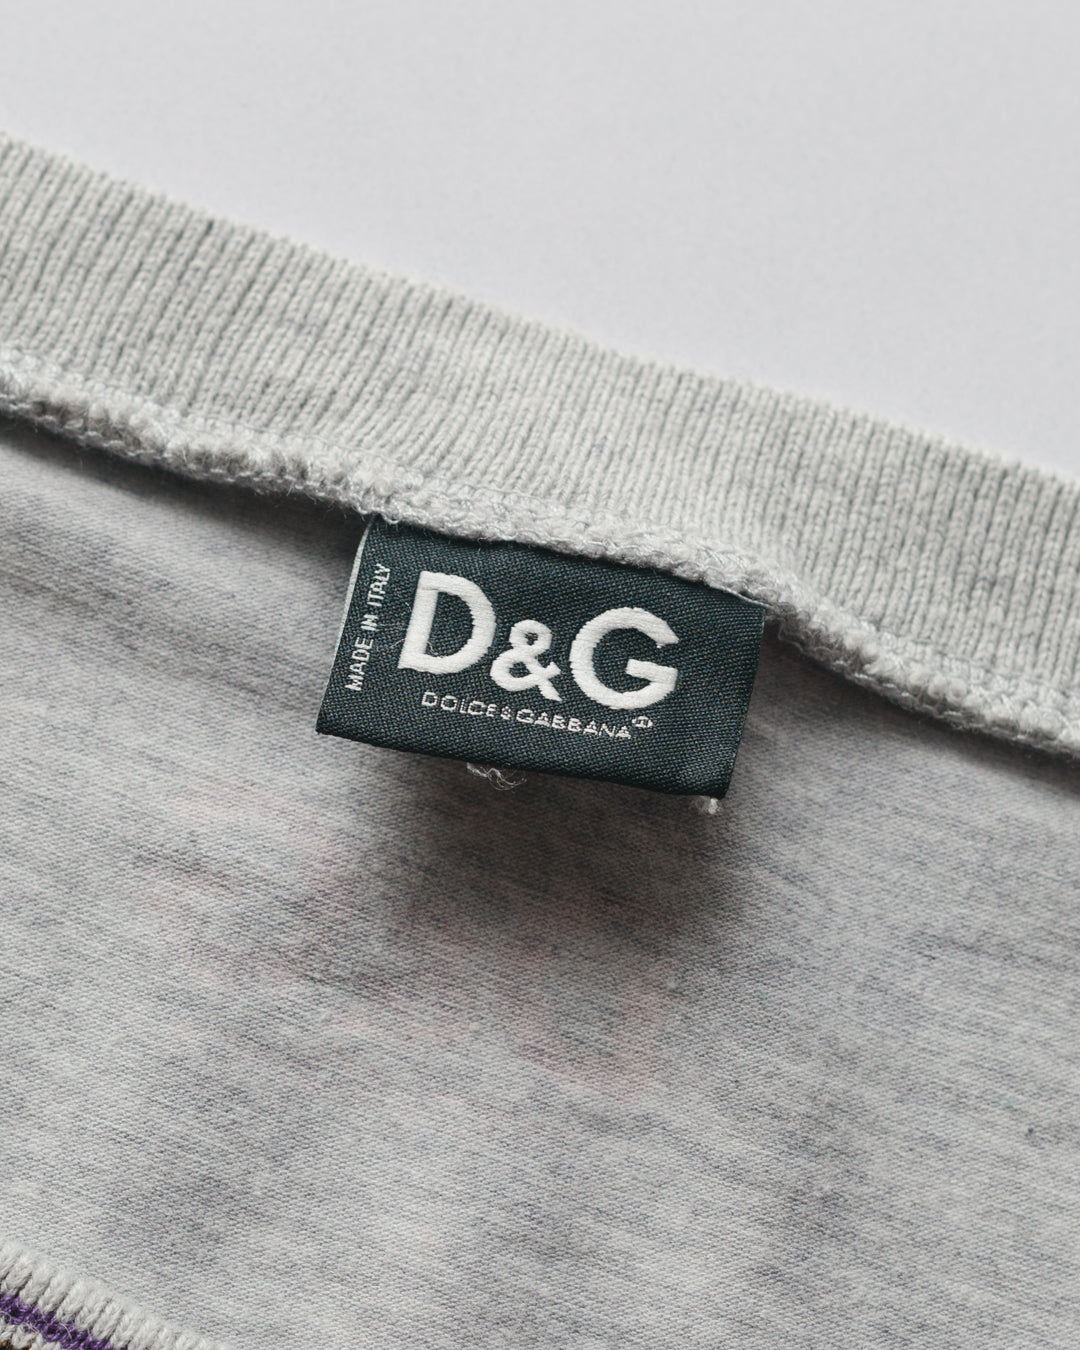 Dolce & Gabbana Printed Front Tshirt